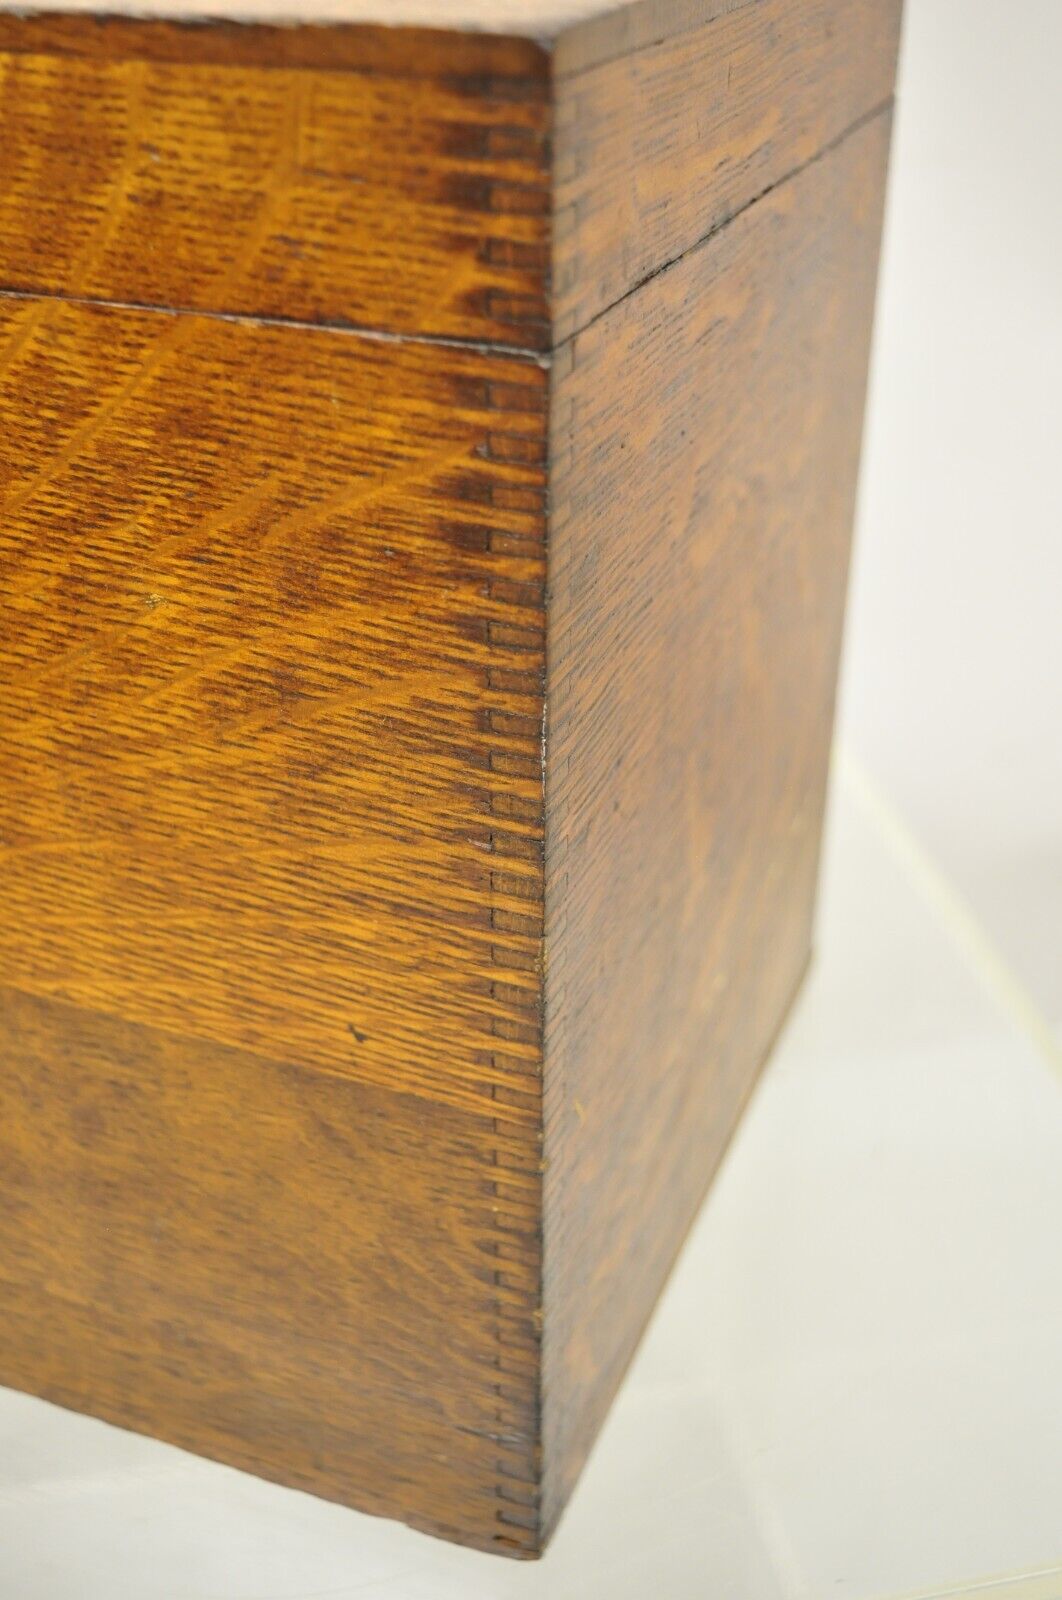 Antique 11" Oak Wood Arts & Crafts Storage Hinged Sewing Box